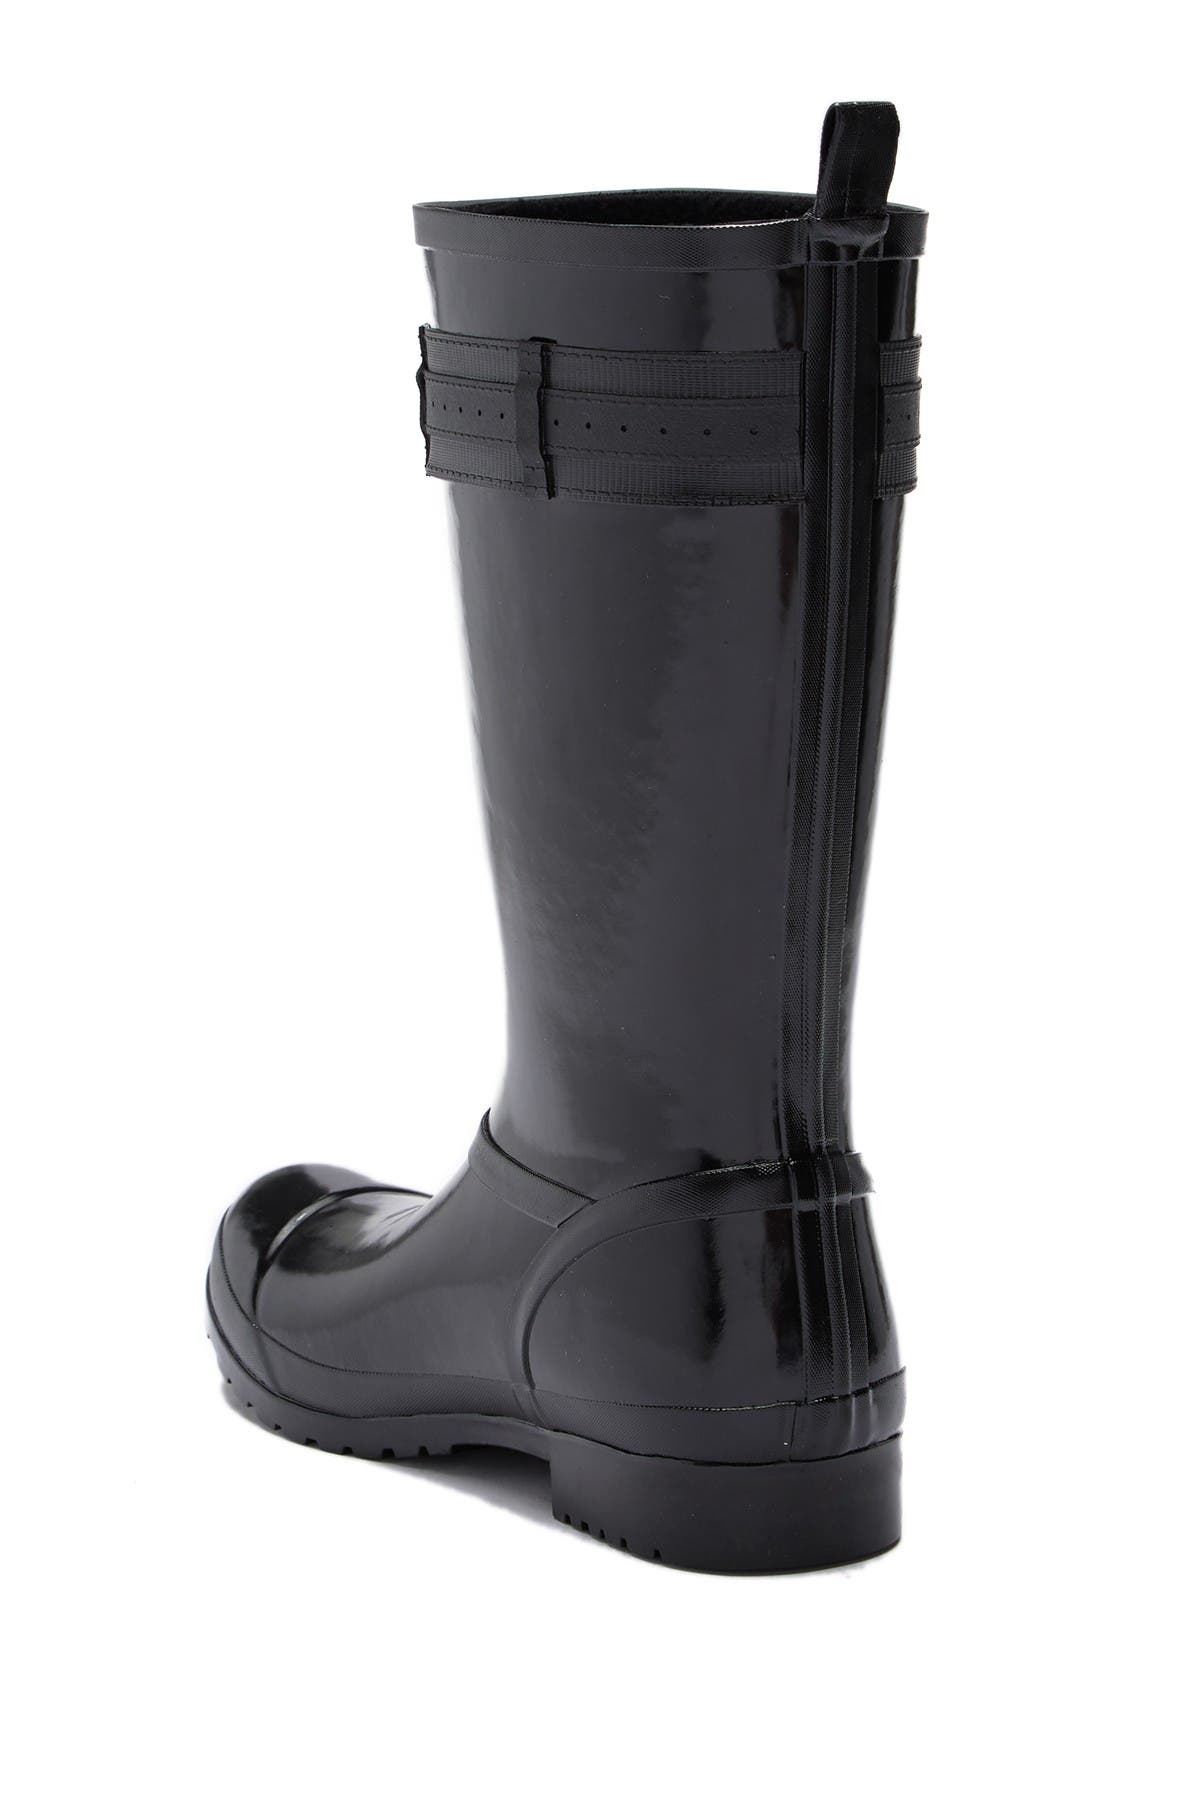 walker atlantic rain boot